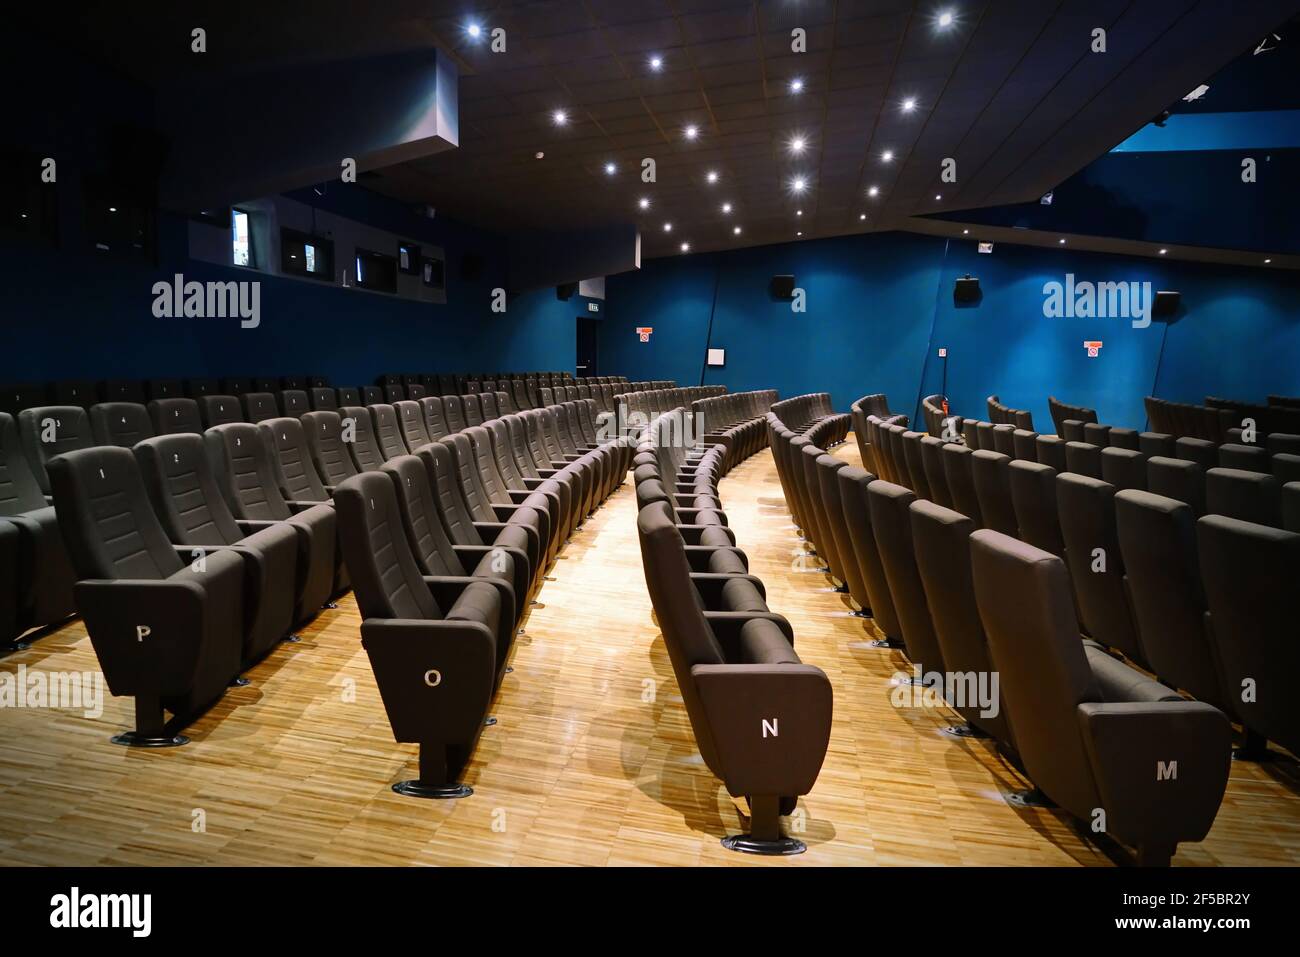 Cinema closed due to Coronavirus. Movie theater closure under COVID-19 global pandemic. Empty velvet seats in theater, cinema. Stock Photo